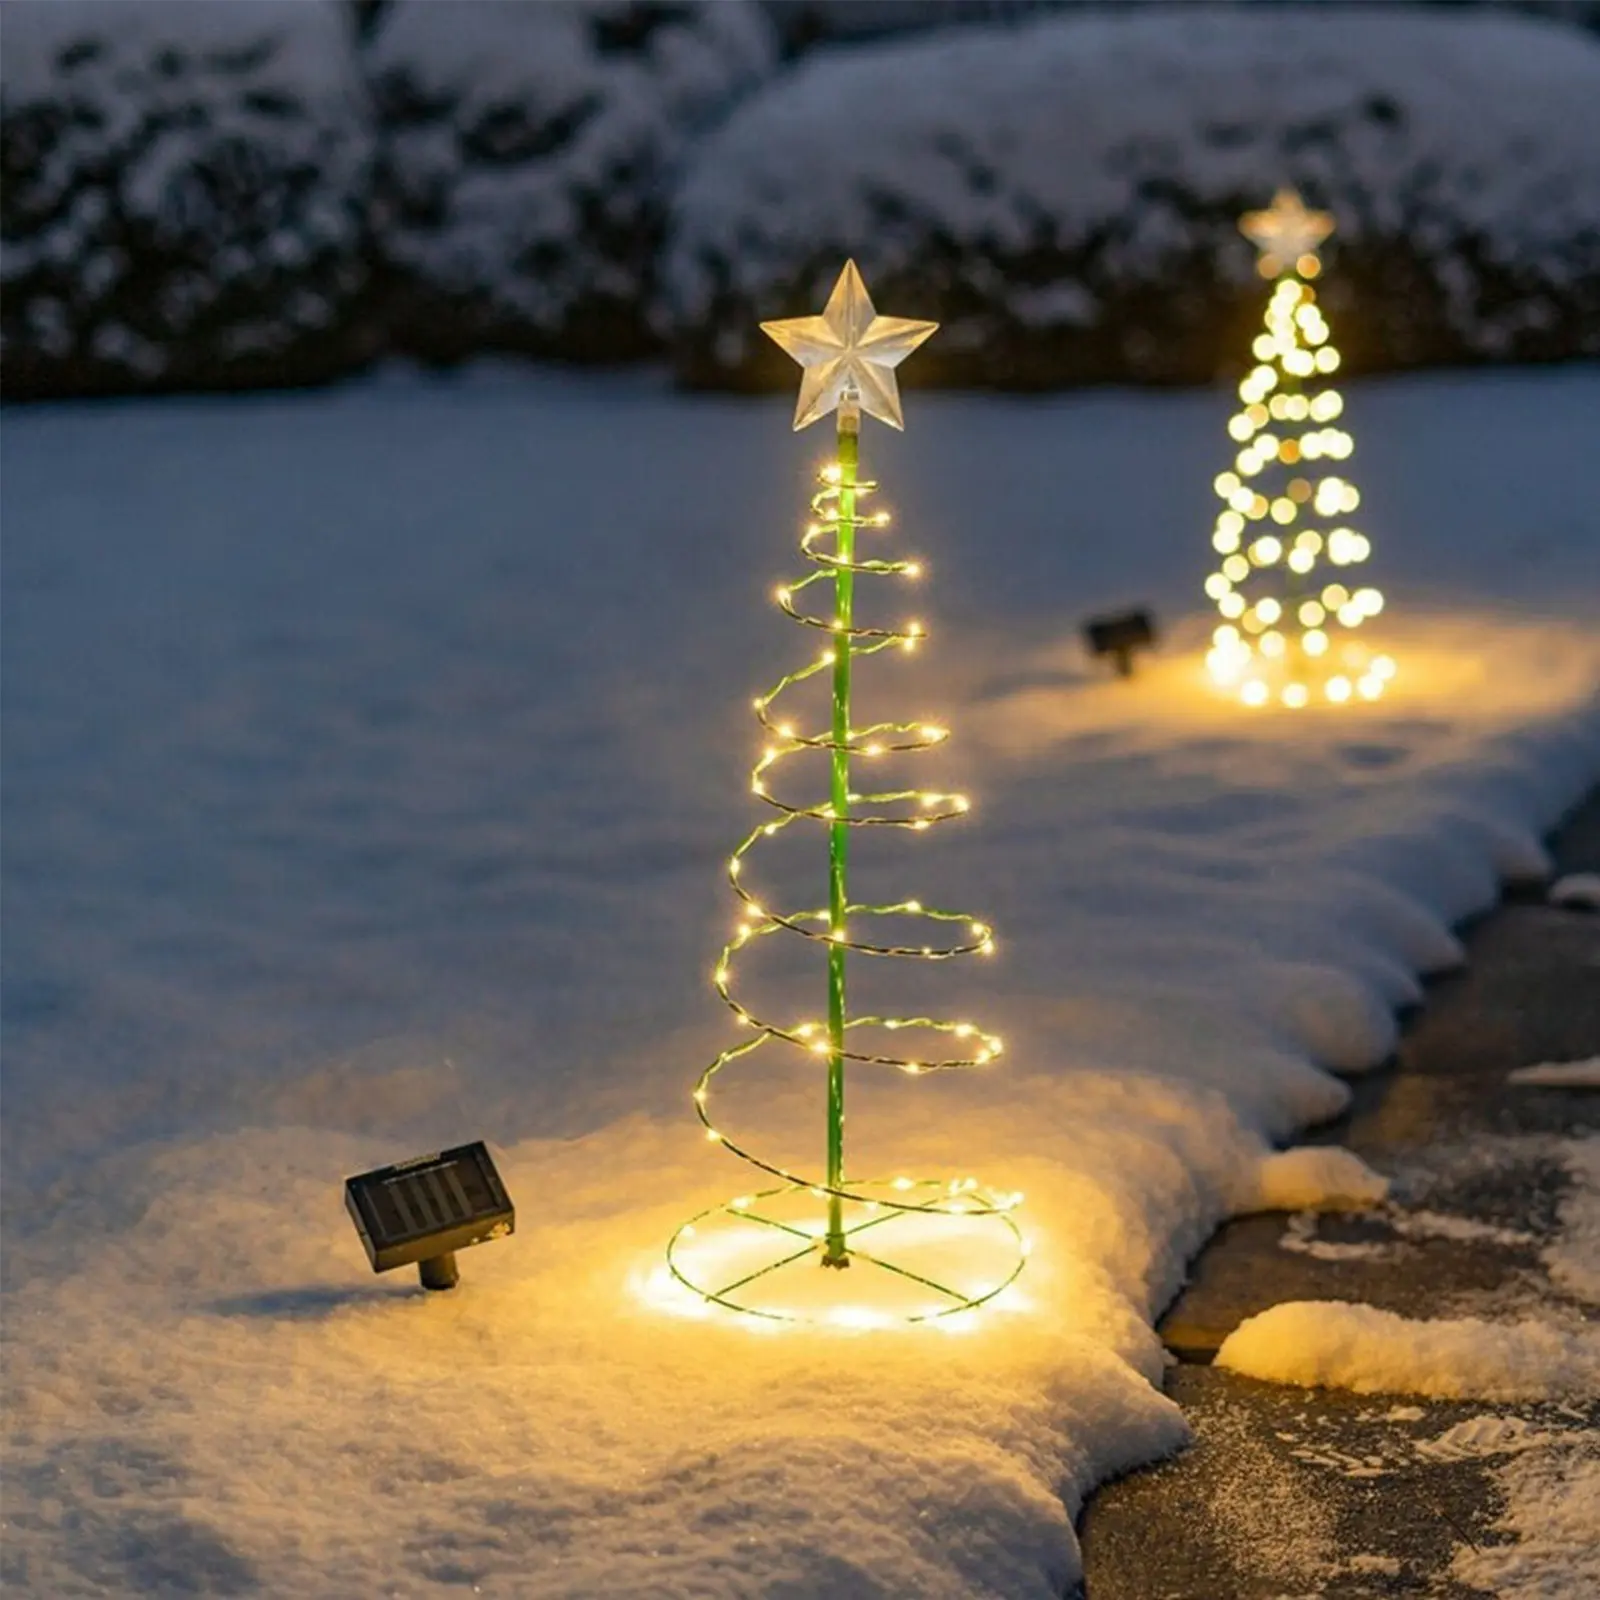 Solar Led Christmas Tree Decorations Christmas Tree With Led Lights Included Christmas Lights Tree Wholesale